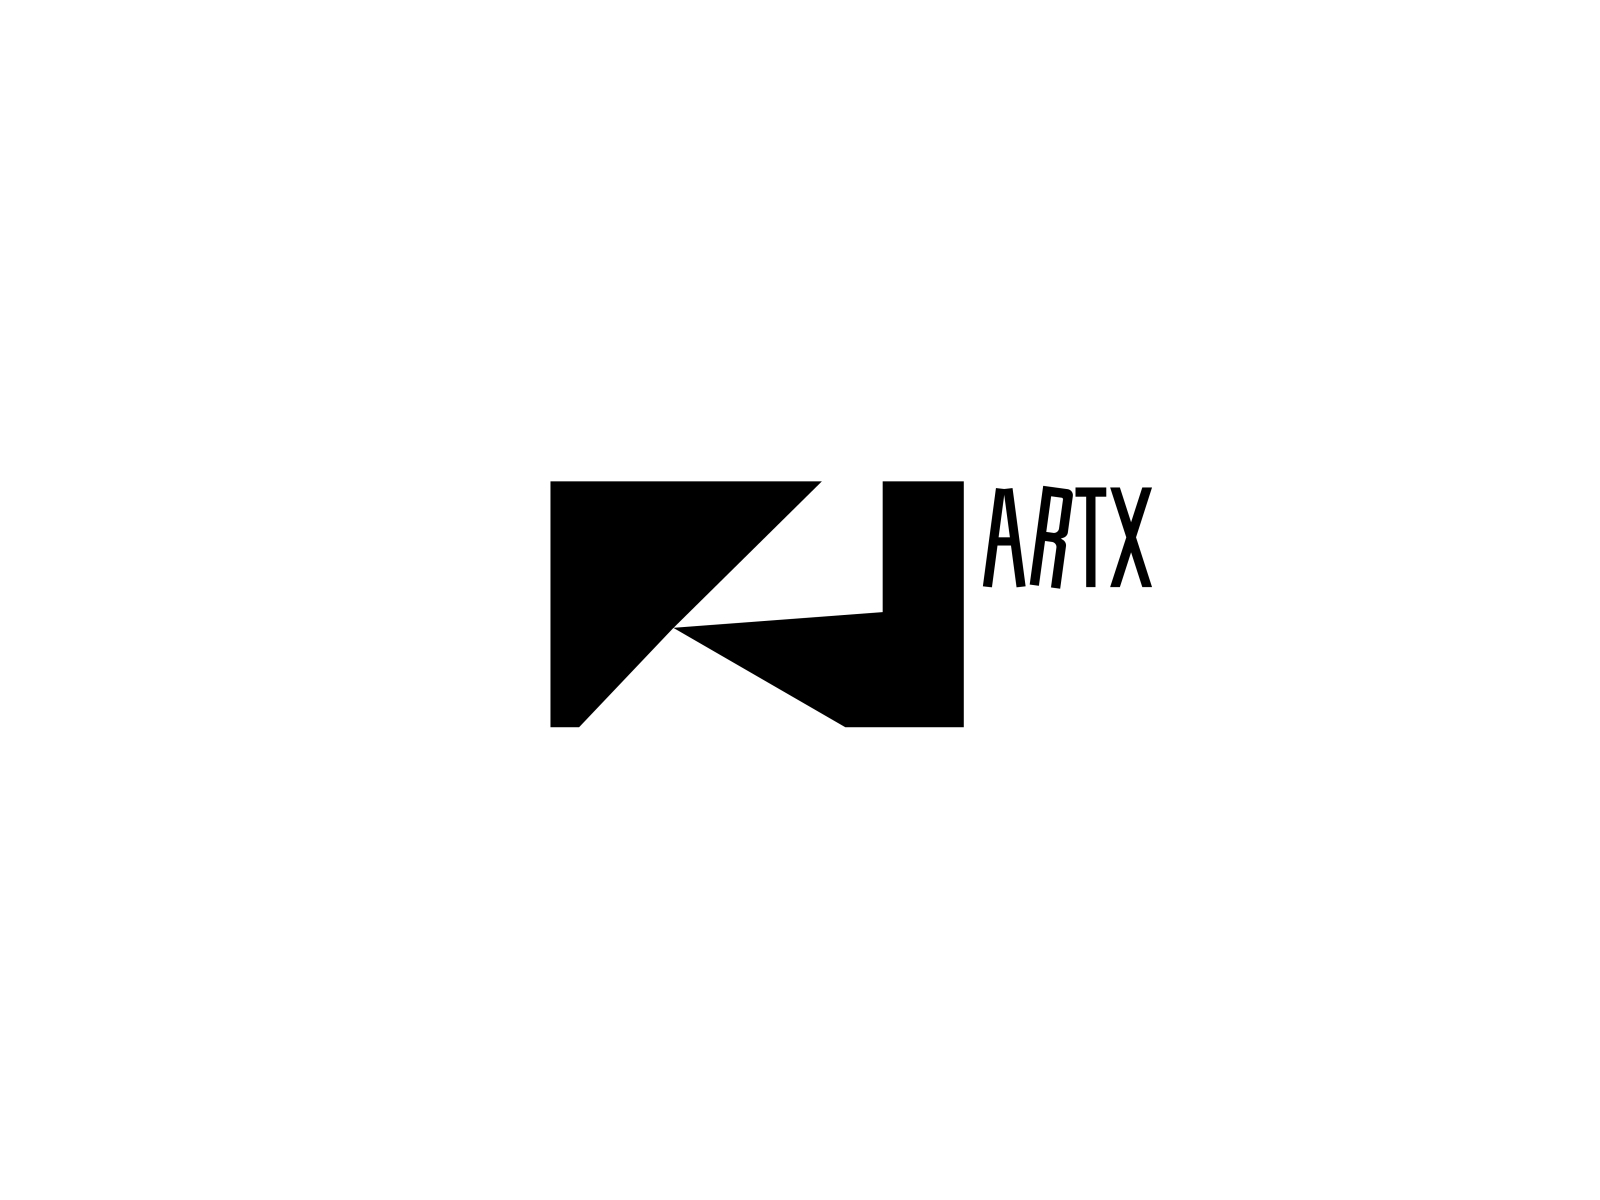 ARTX// logo for a modern art space by Ylia Alexx on Dribbble